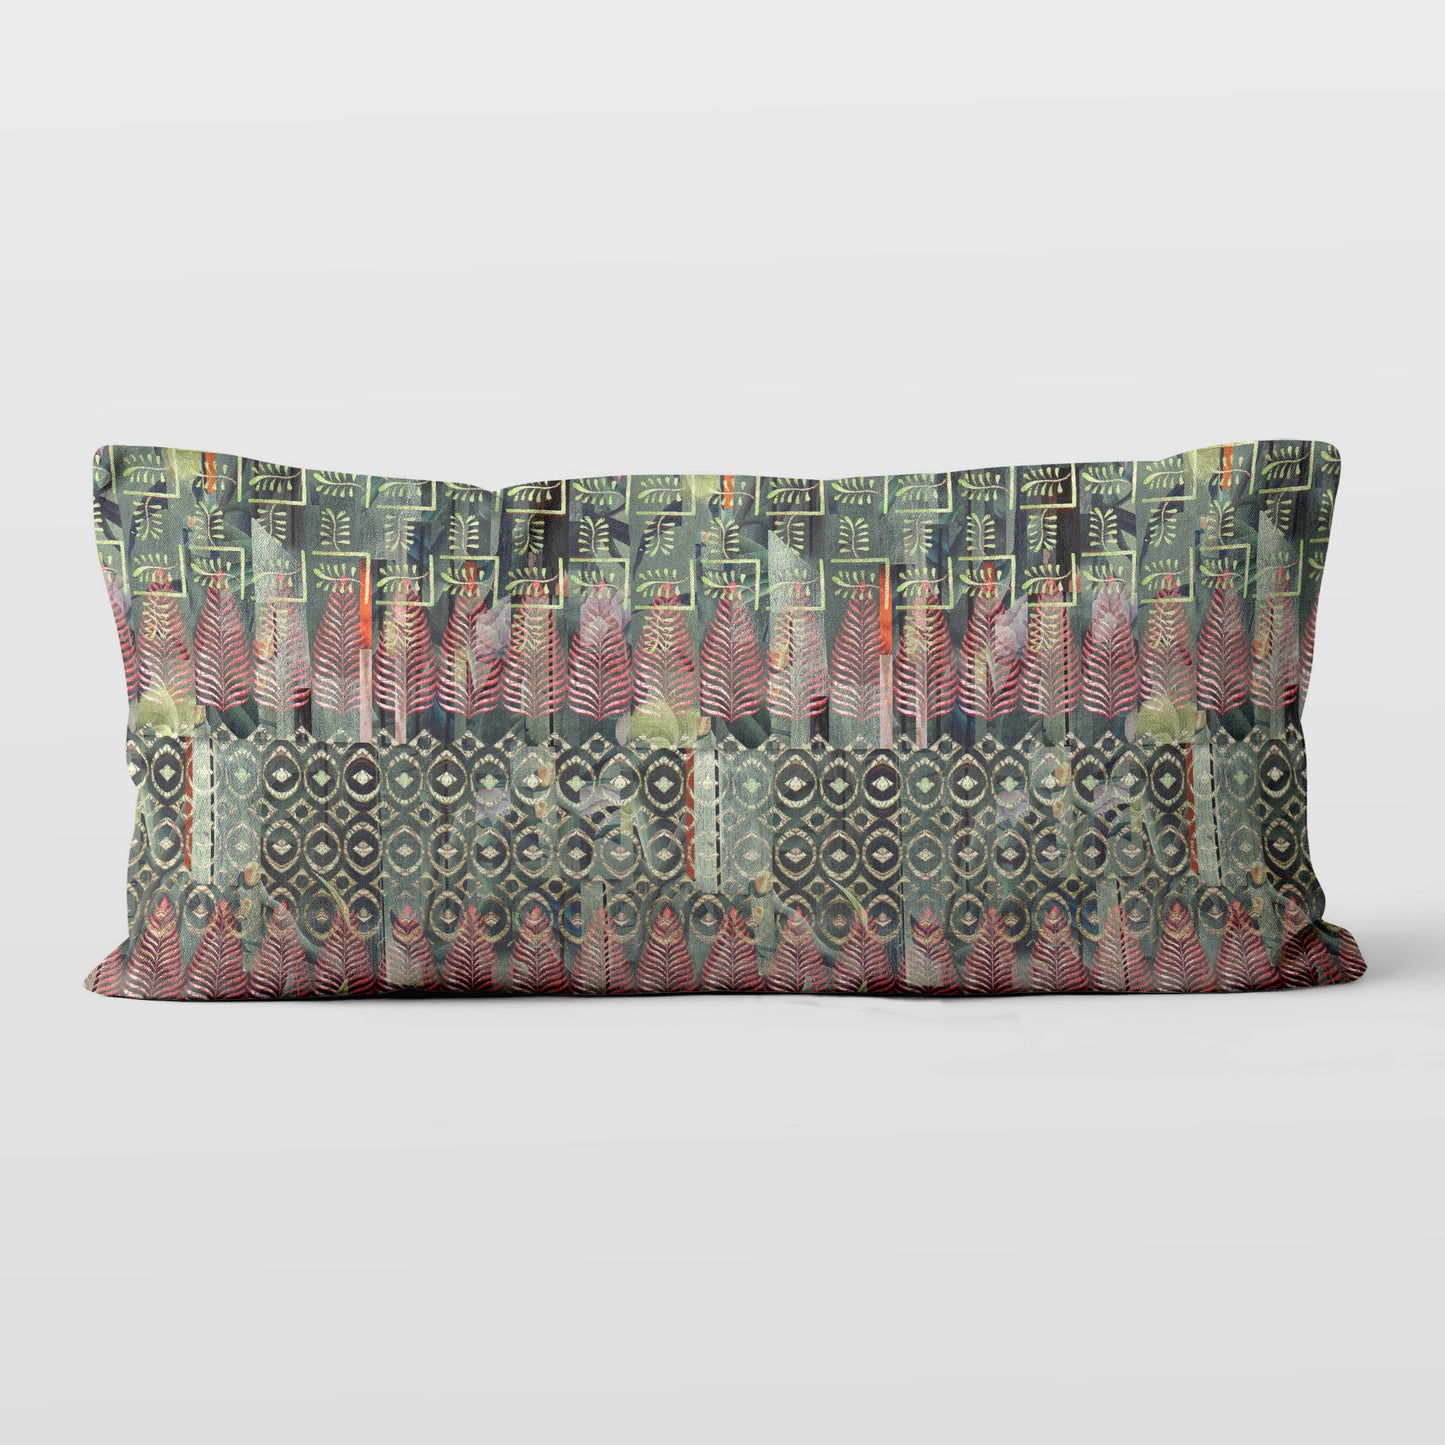 Rectangular lumbar pillow featuring a collaged and block print pattern in green.